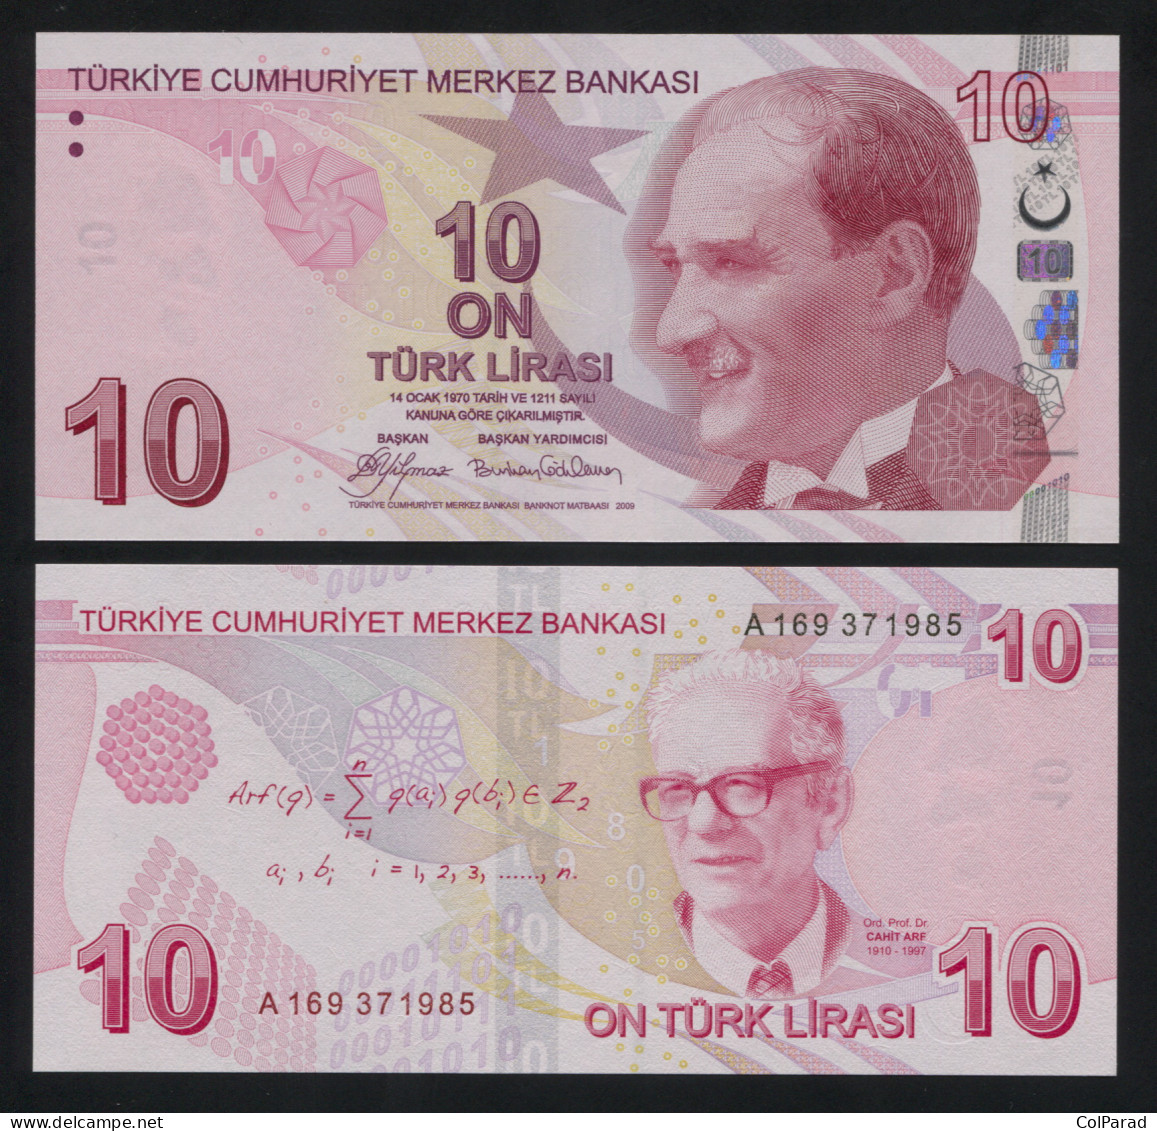 TURKEY 10 TÜRK LIRASI - 2009 - Paper Unc - P.223a Banknote - Türkei